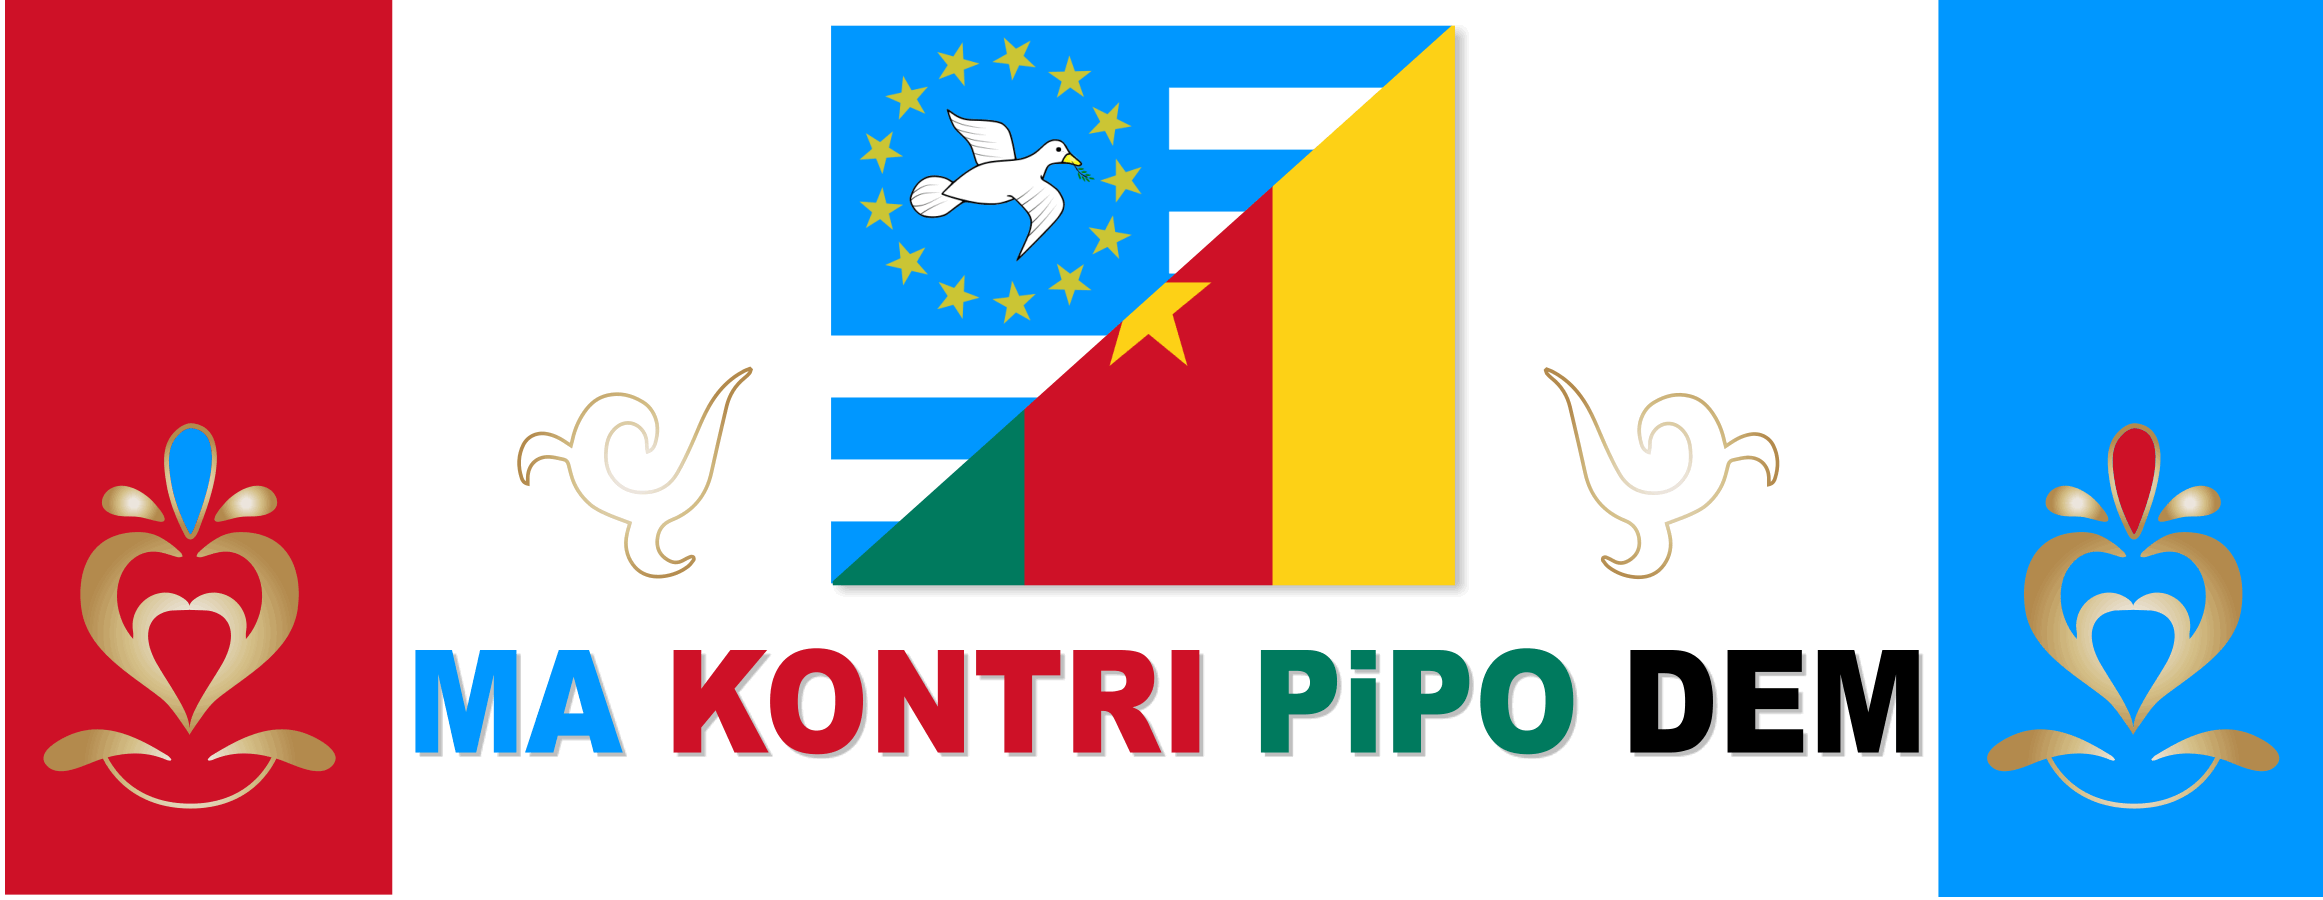 mkpd - 1 Logo